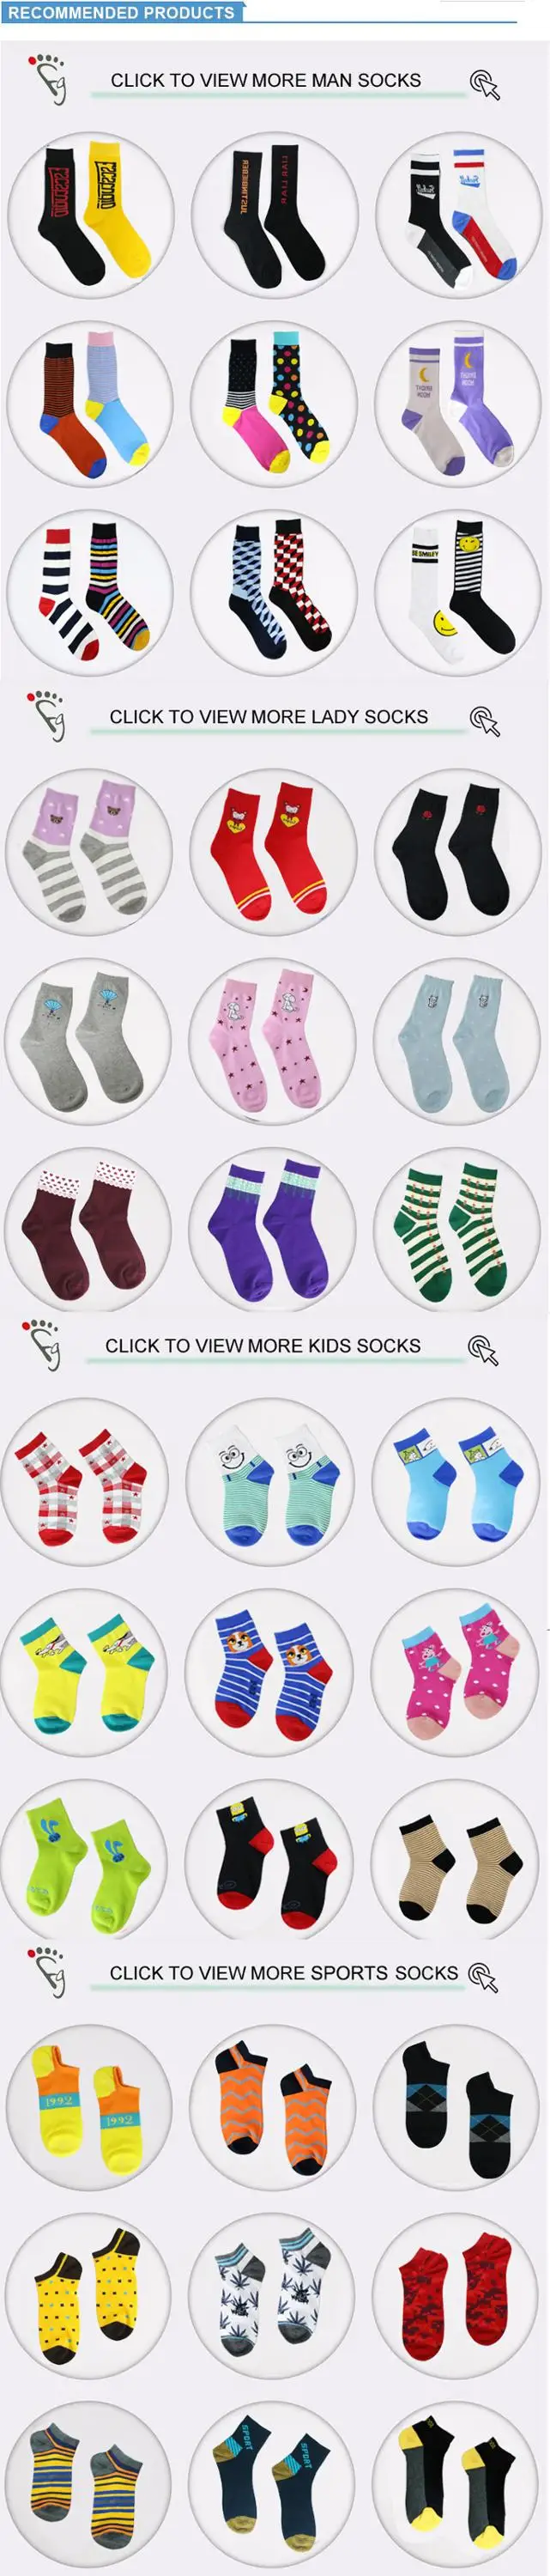 mens cotton socks male socks best man socks